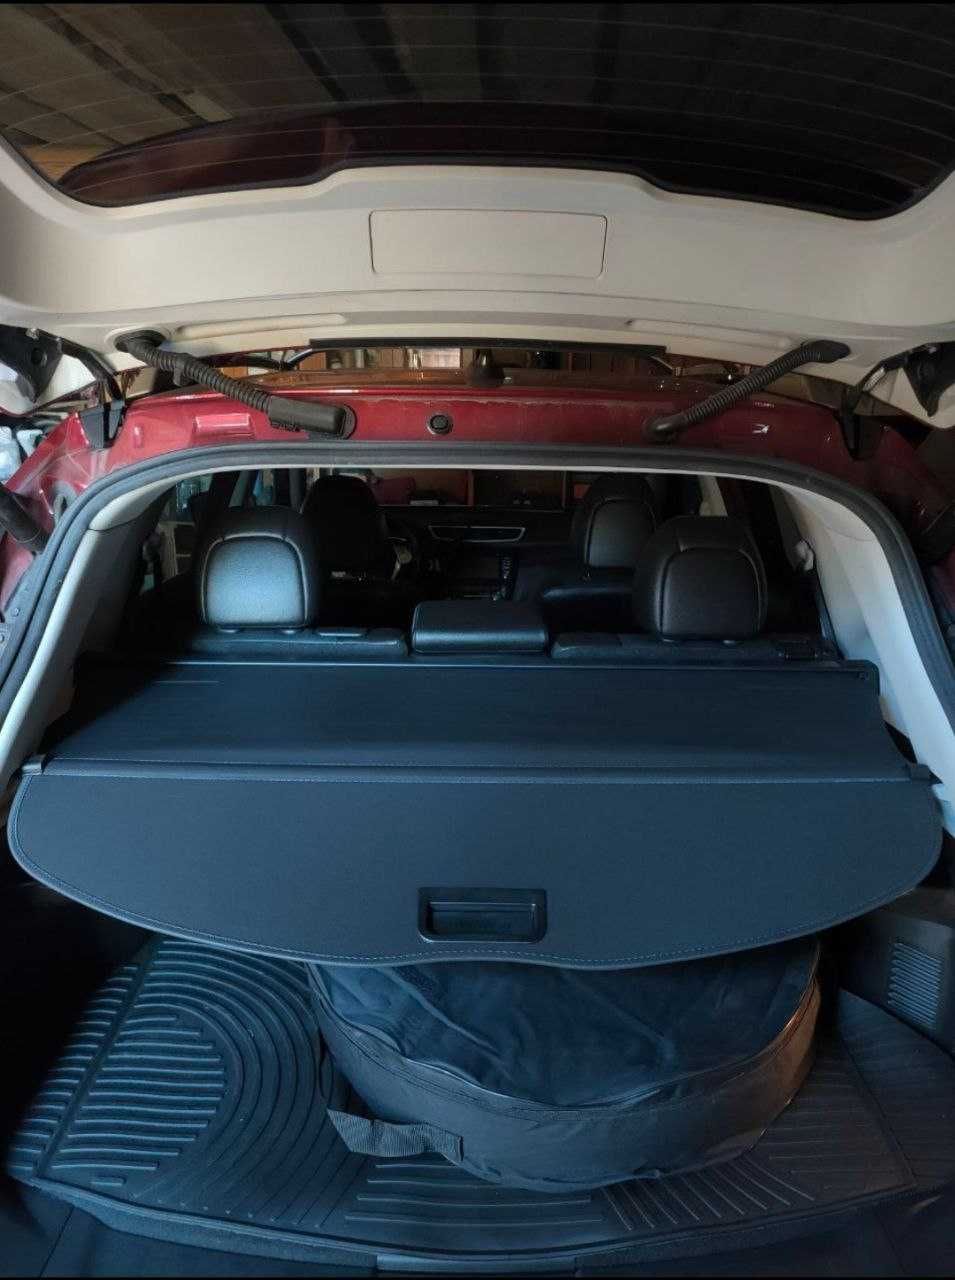 Шторка в багажник для Nissan Rogue, X-trail в кузове Т32 2014-2020г